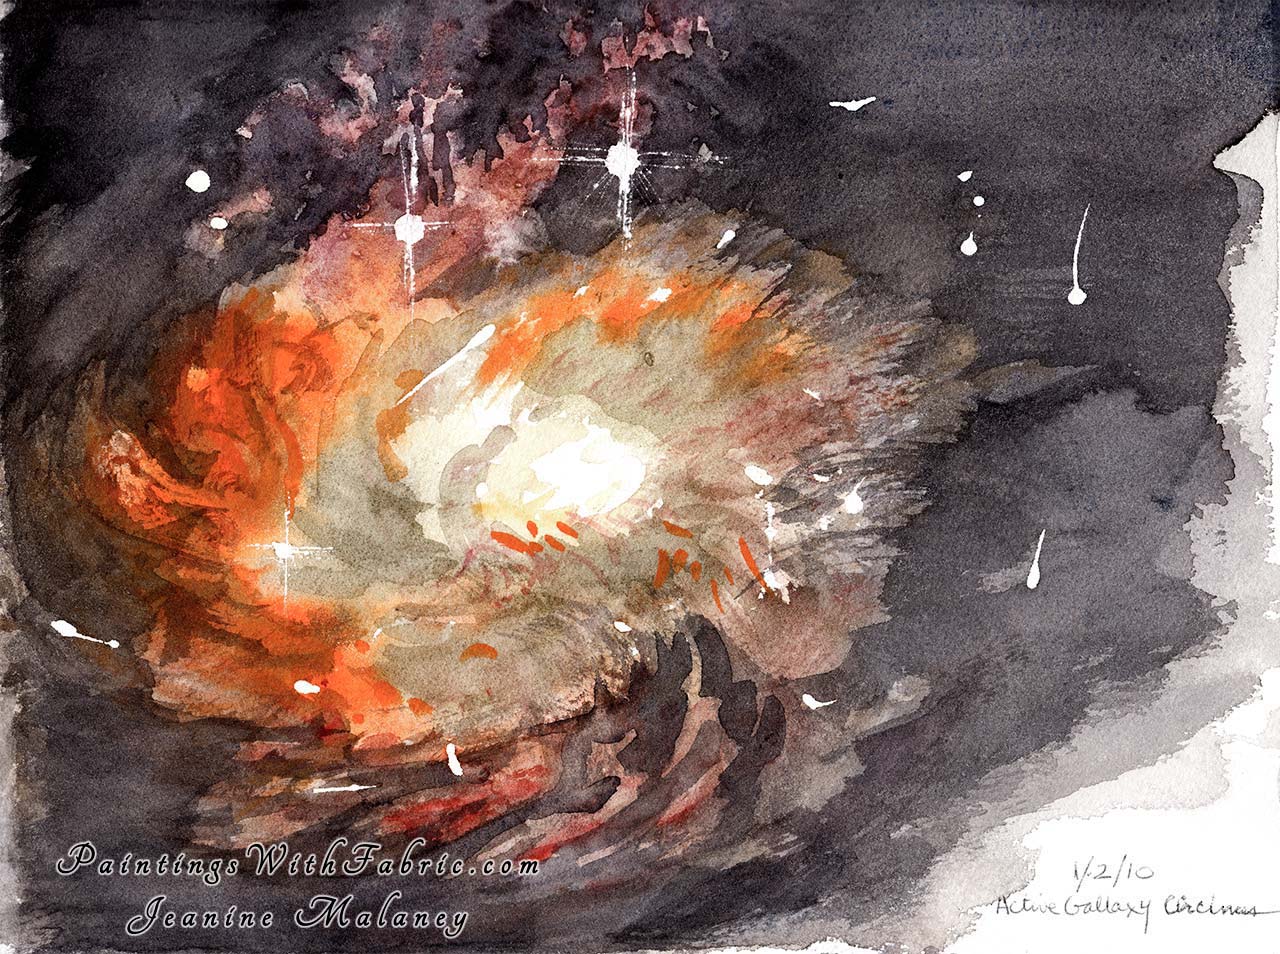 Active Galaxy Circinus Unframed Original Watercolor Painting A celestial wonder